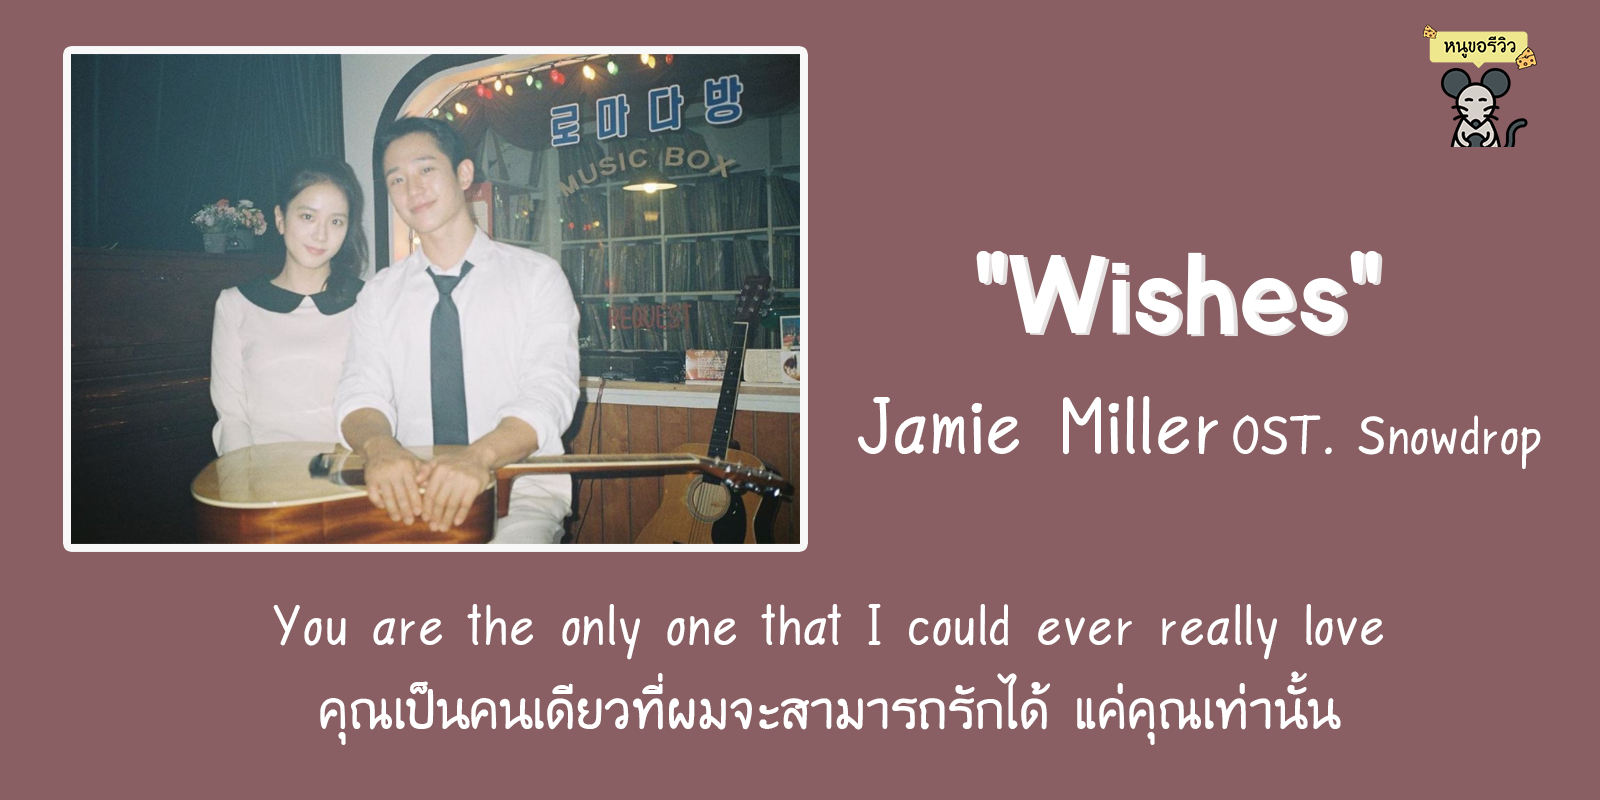 Jamie miller wishes Jamie Miller